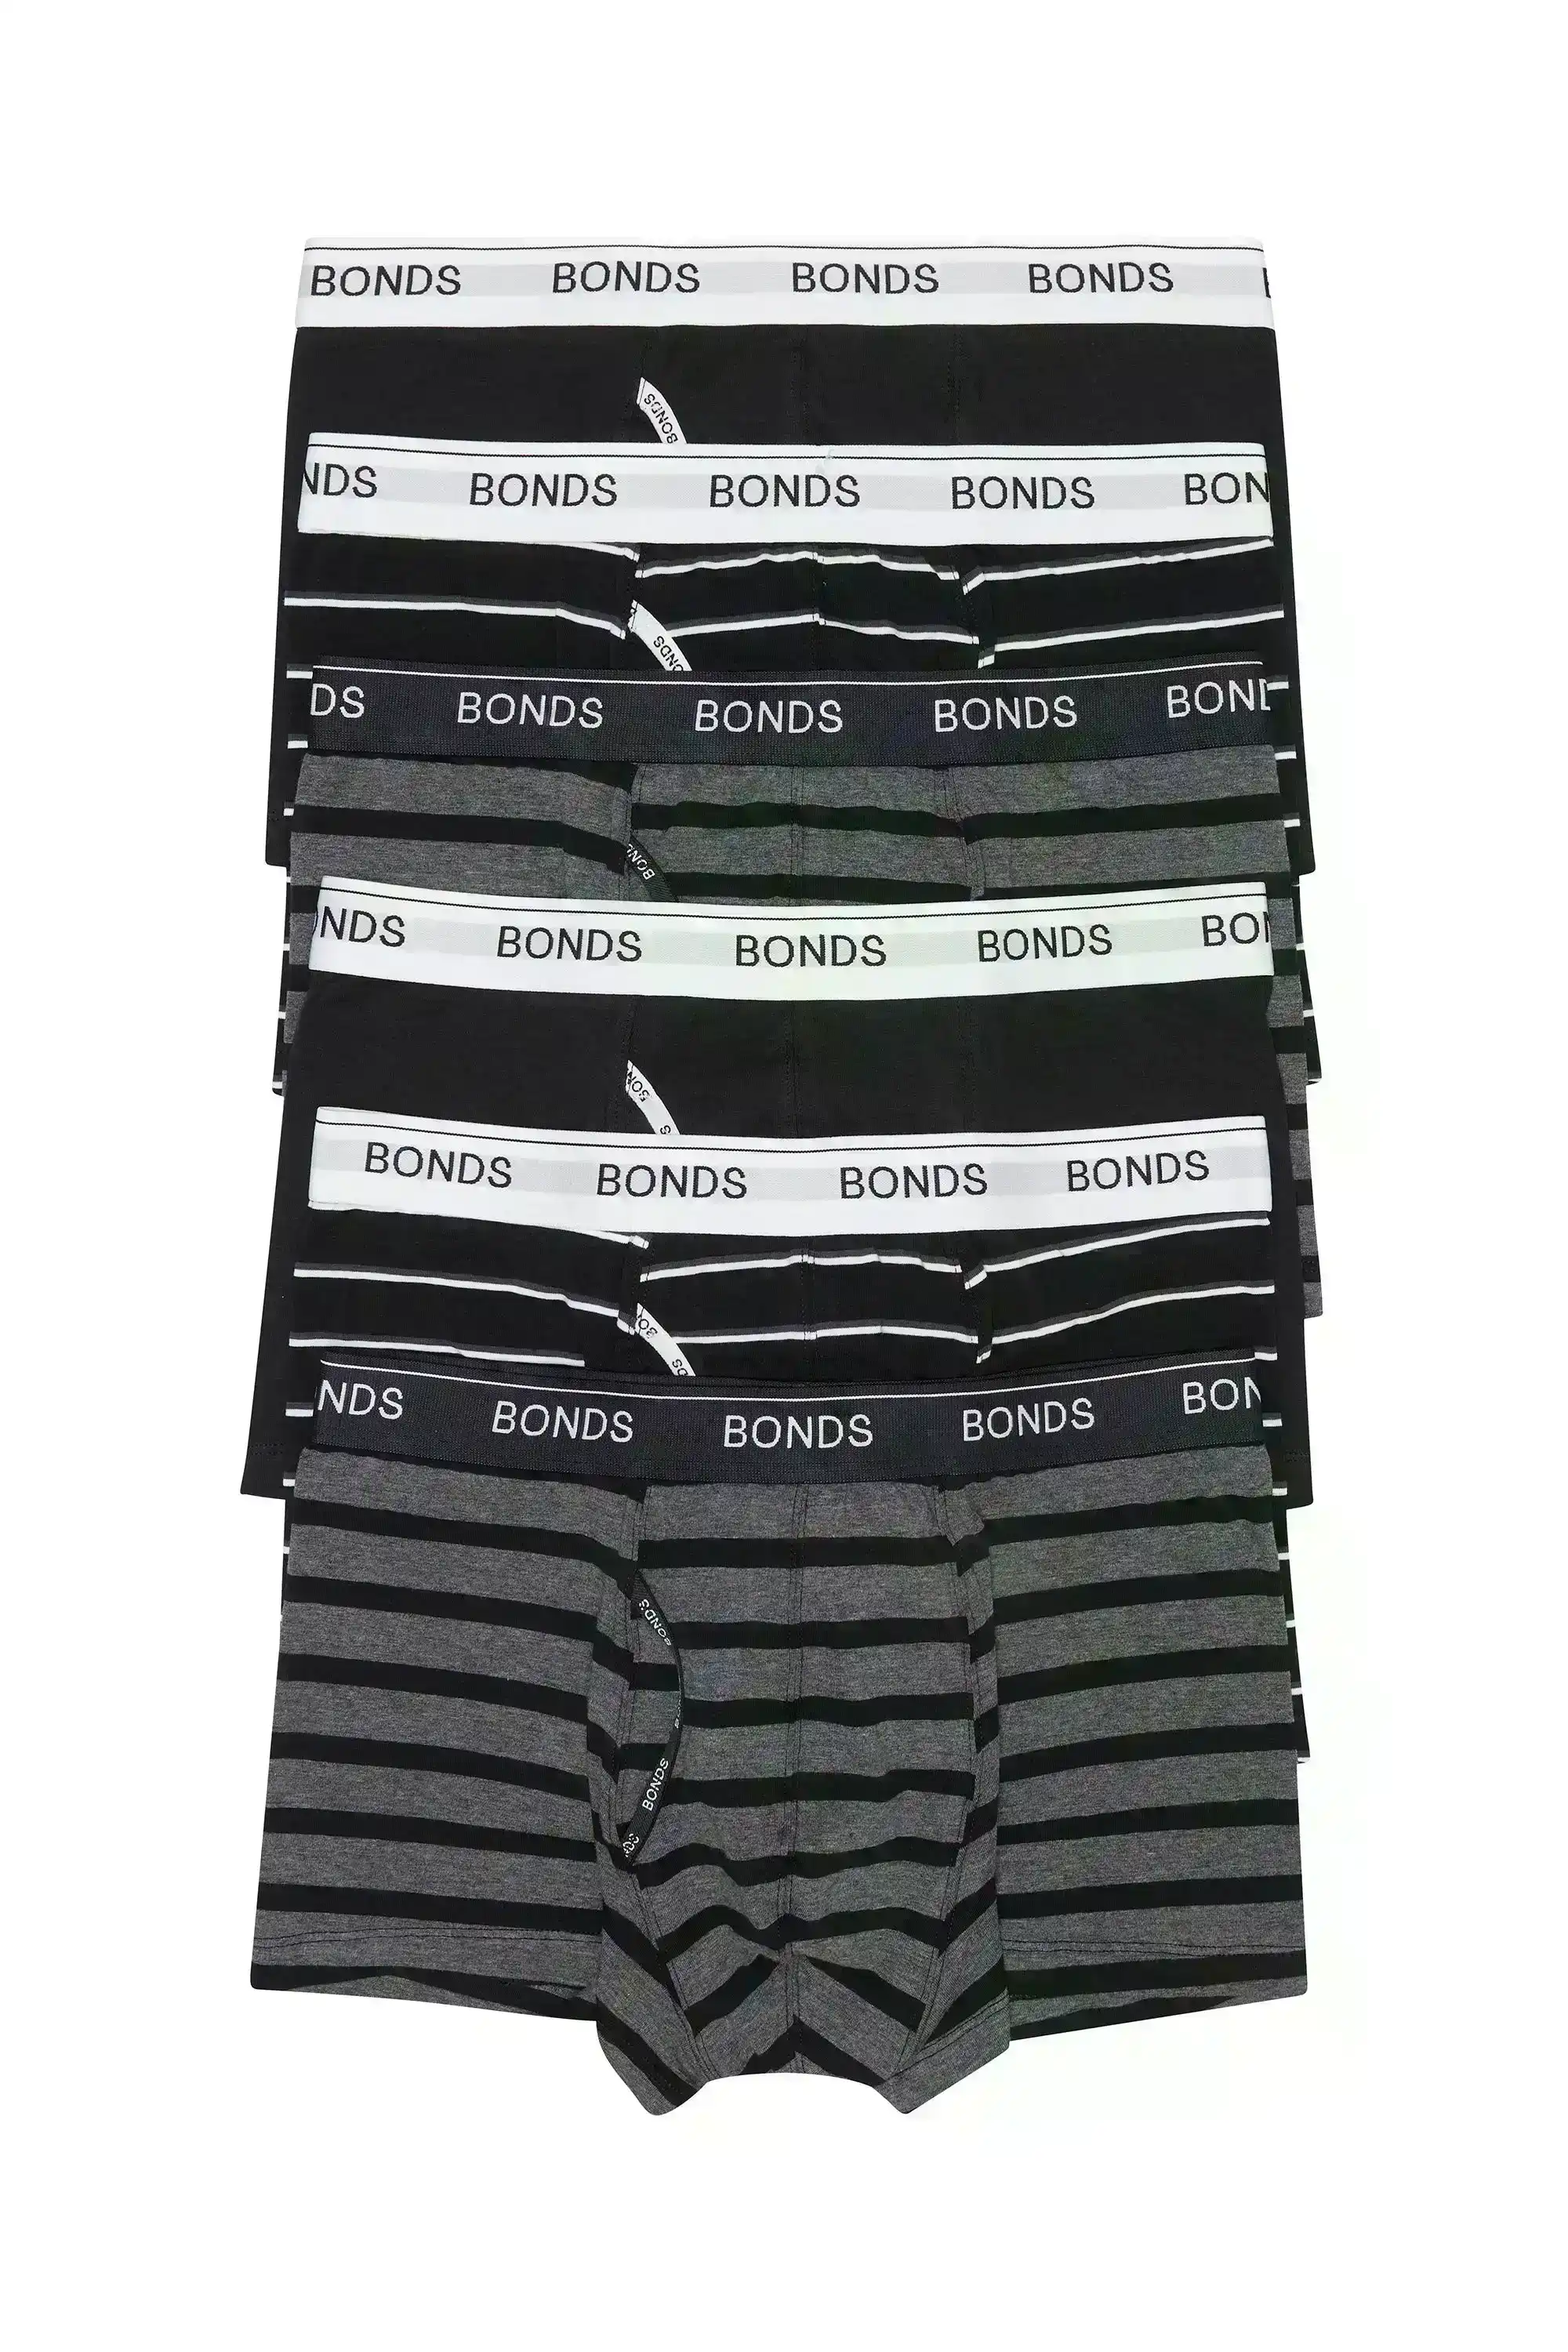 24 X Bonds Mens Guyfront Trunks Underwear Black / Grey Stripe